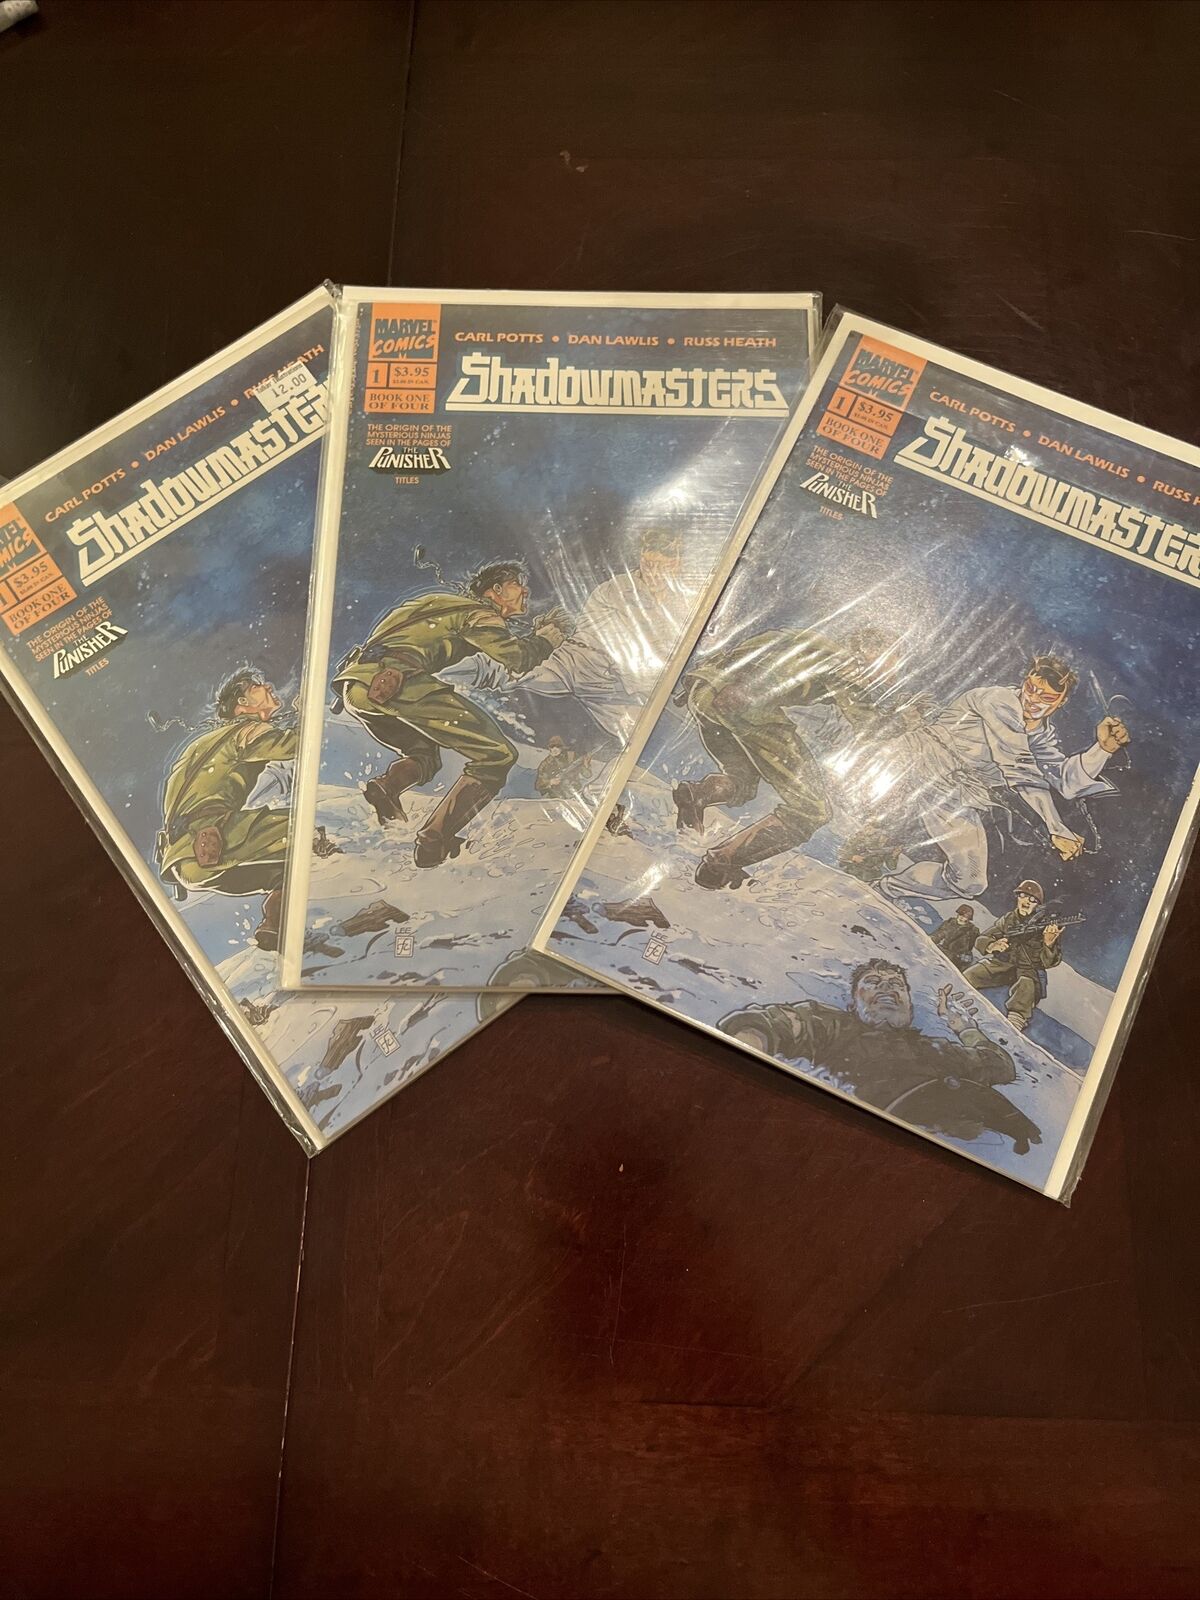 Shadowmasters #1 Marvel Comics 1989 VF + Jim Lee Cover